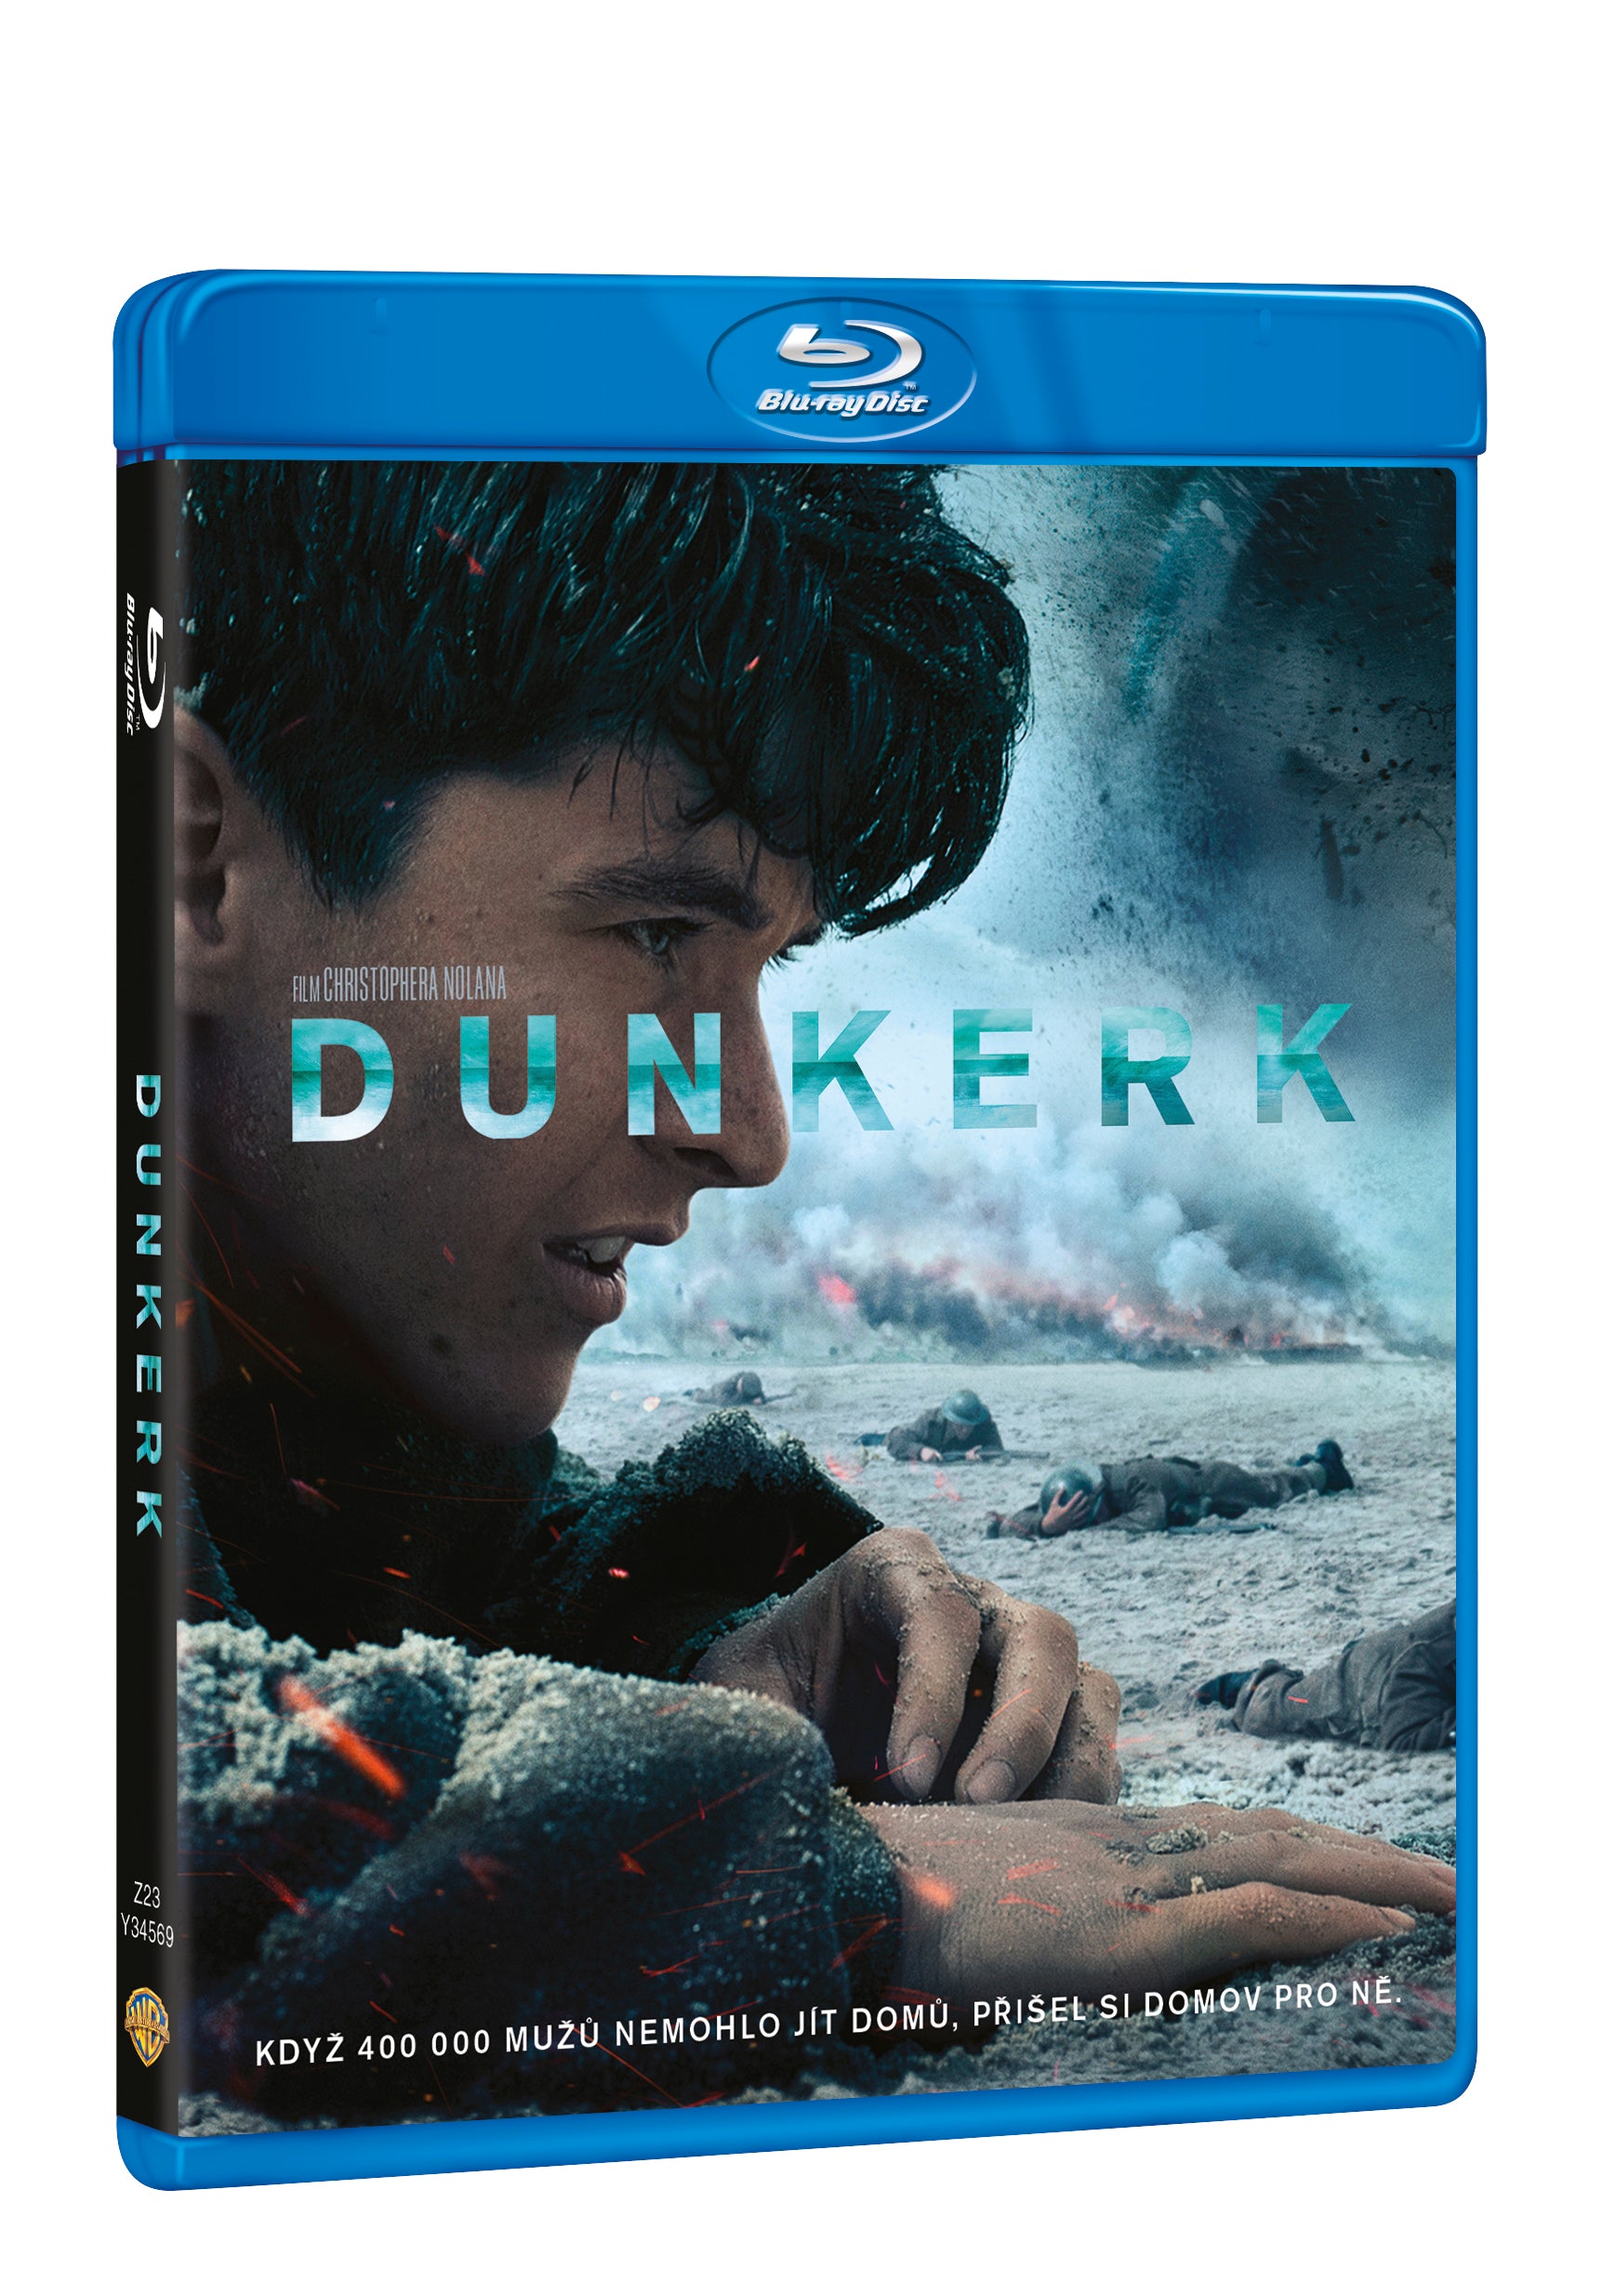 Dunkerk 2BD (BD+bonus disk) / Dunkirk - Czech version